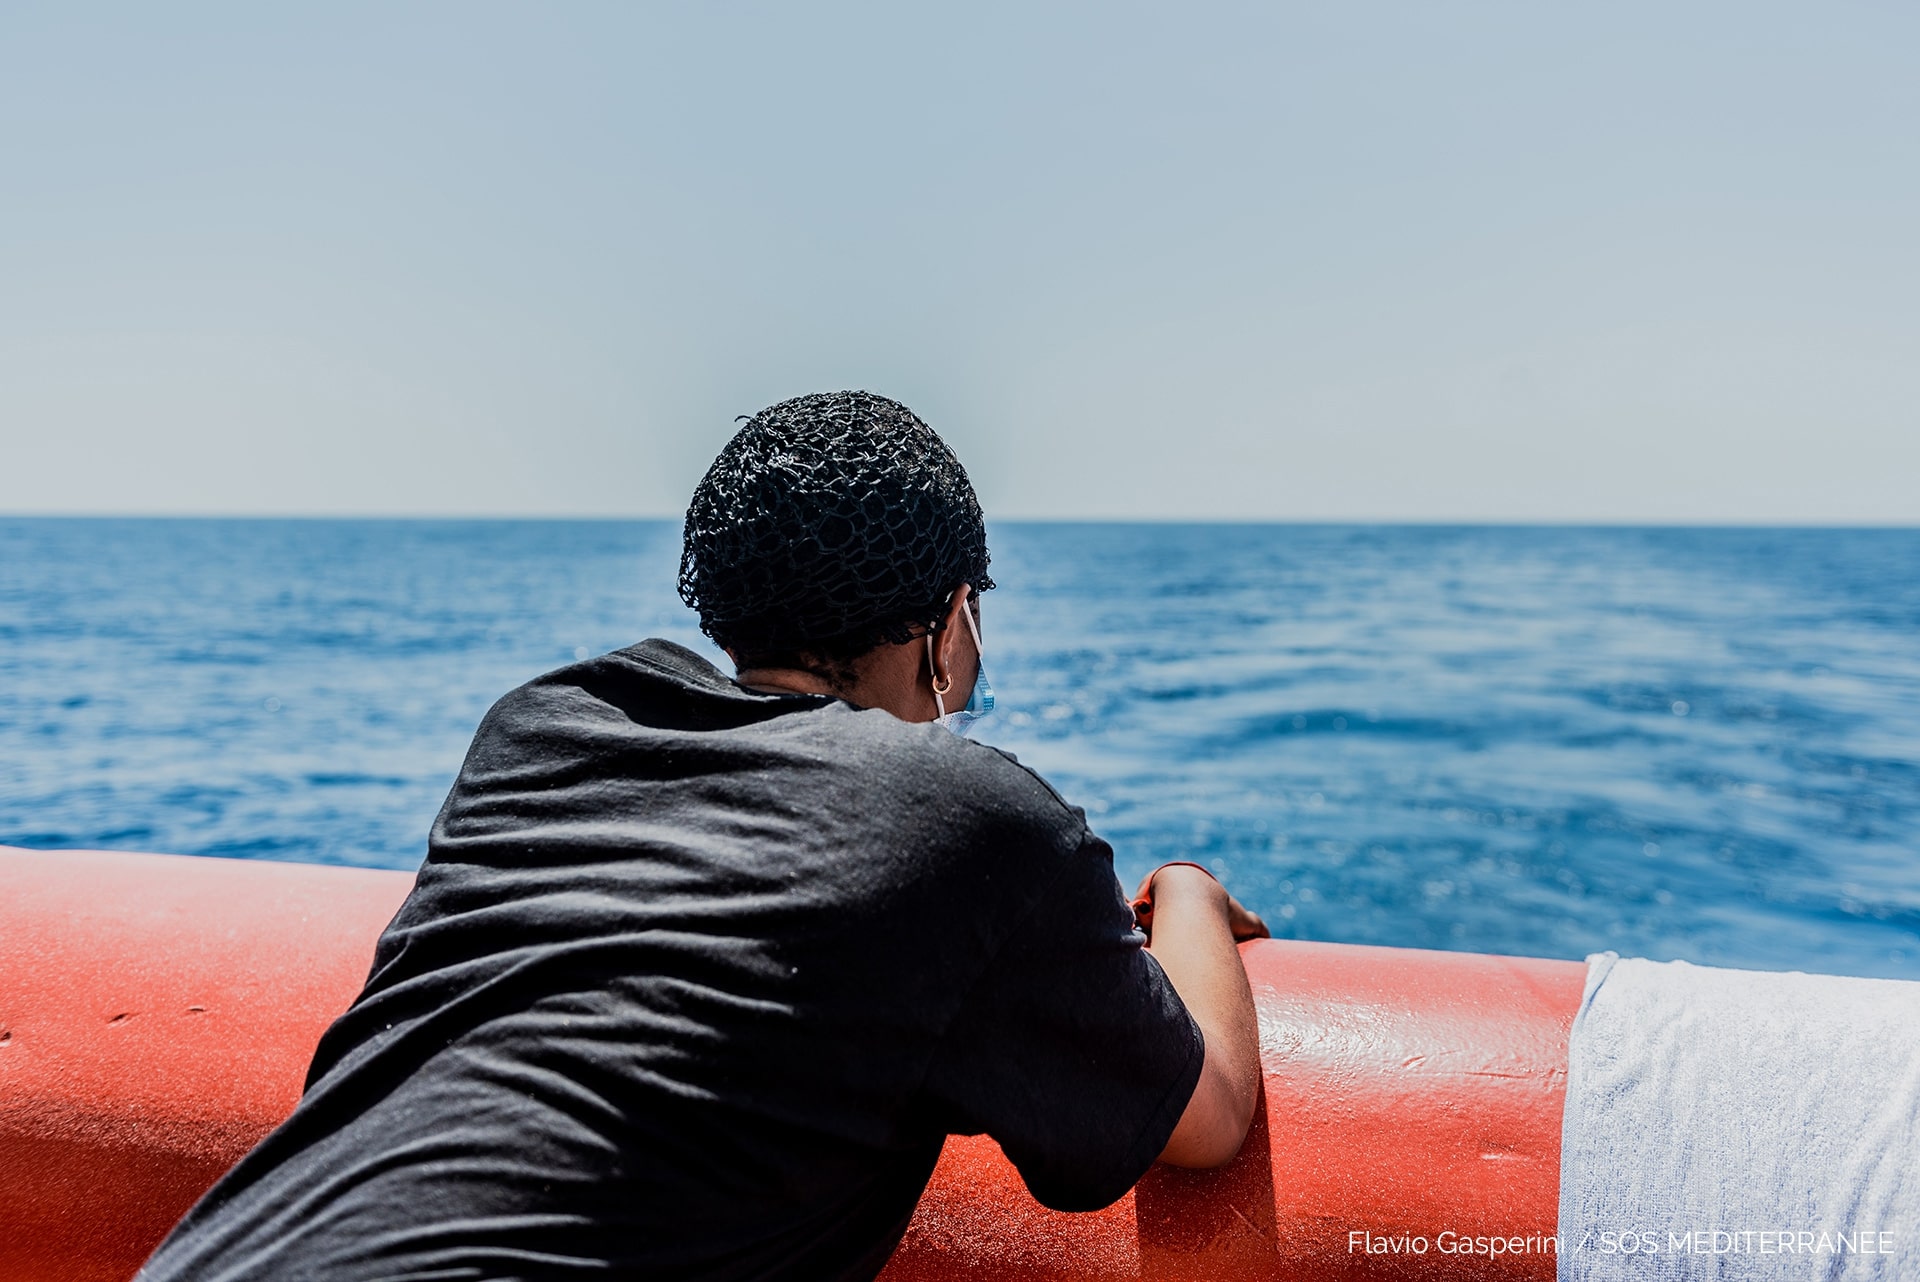 [TÉMOIGNAGE] « Quand je me suis réveillée, je ne savais pas si j’étais morte ou vivante » - Abi, 18 ans, rescapée SOS Méditerranée